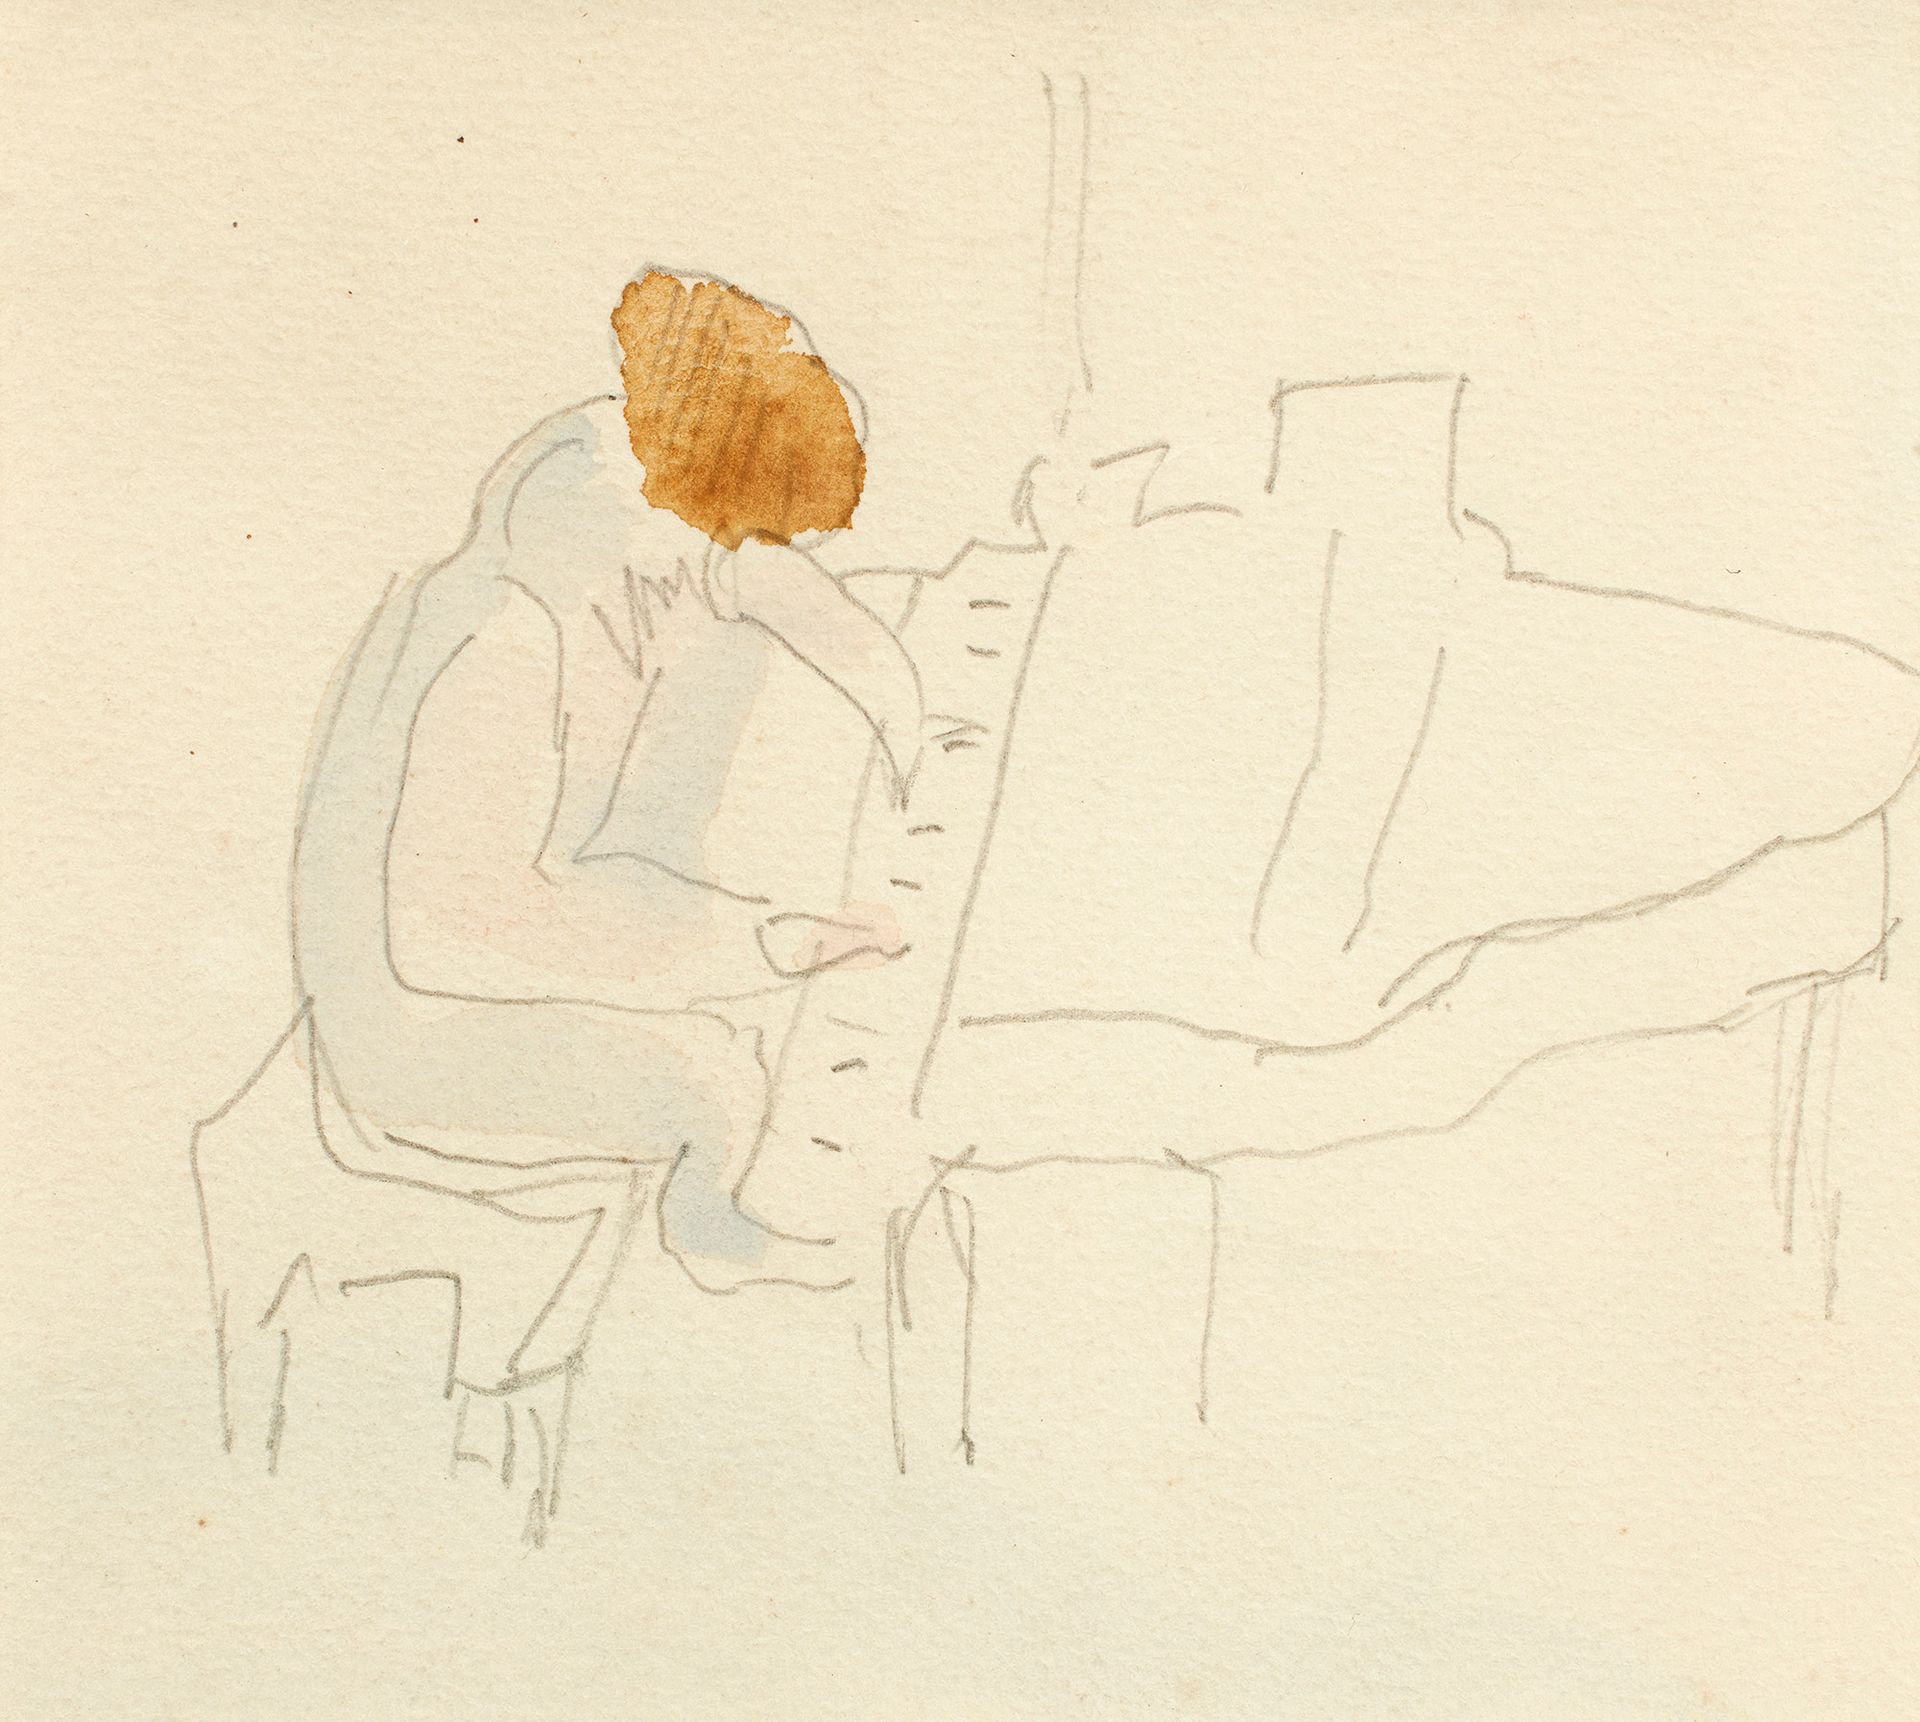 Louis VALTAT (1869 - 1952) 路易斯-瓦尔塔 (1869 - 1952)
钢琴家
铅笔画与水彩画的结合
9,5 x 10,5 cm